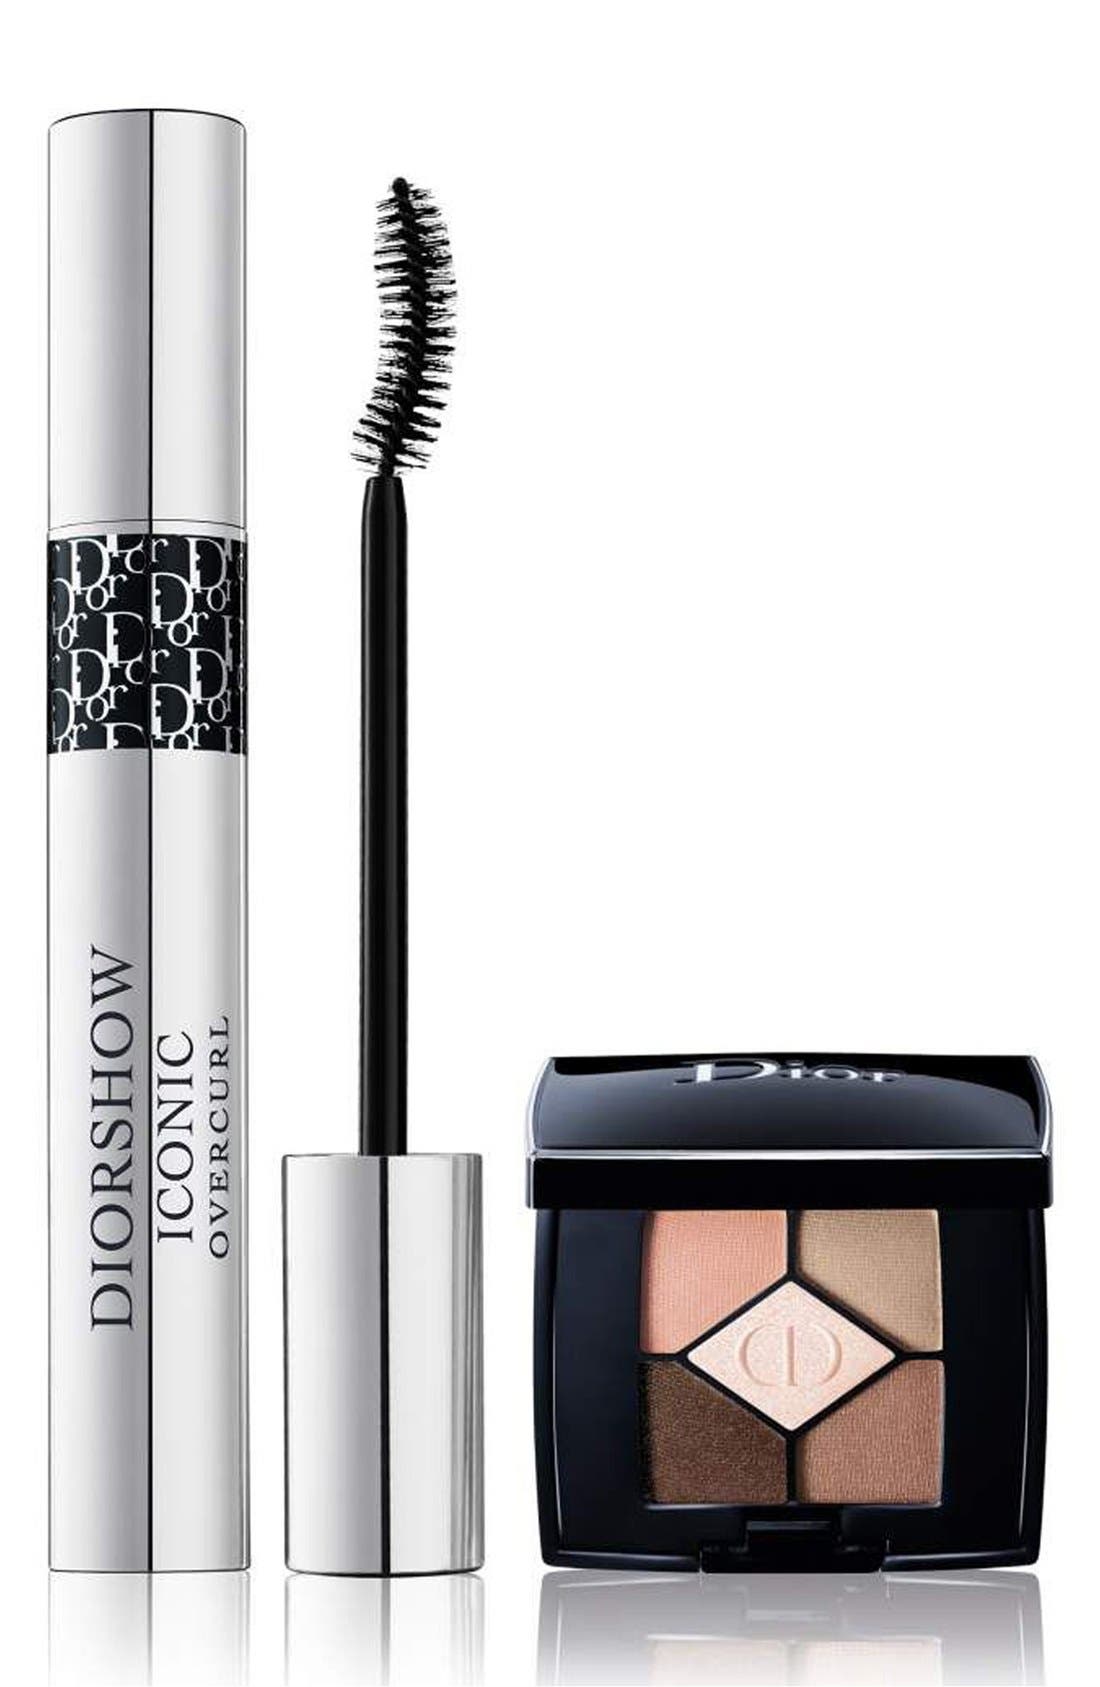 dior mascara and eyeshadow set